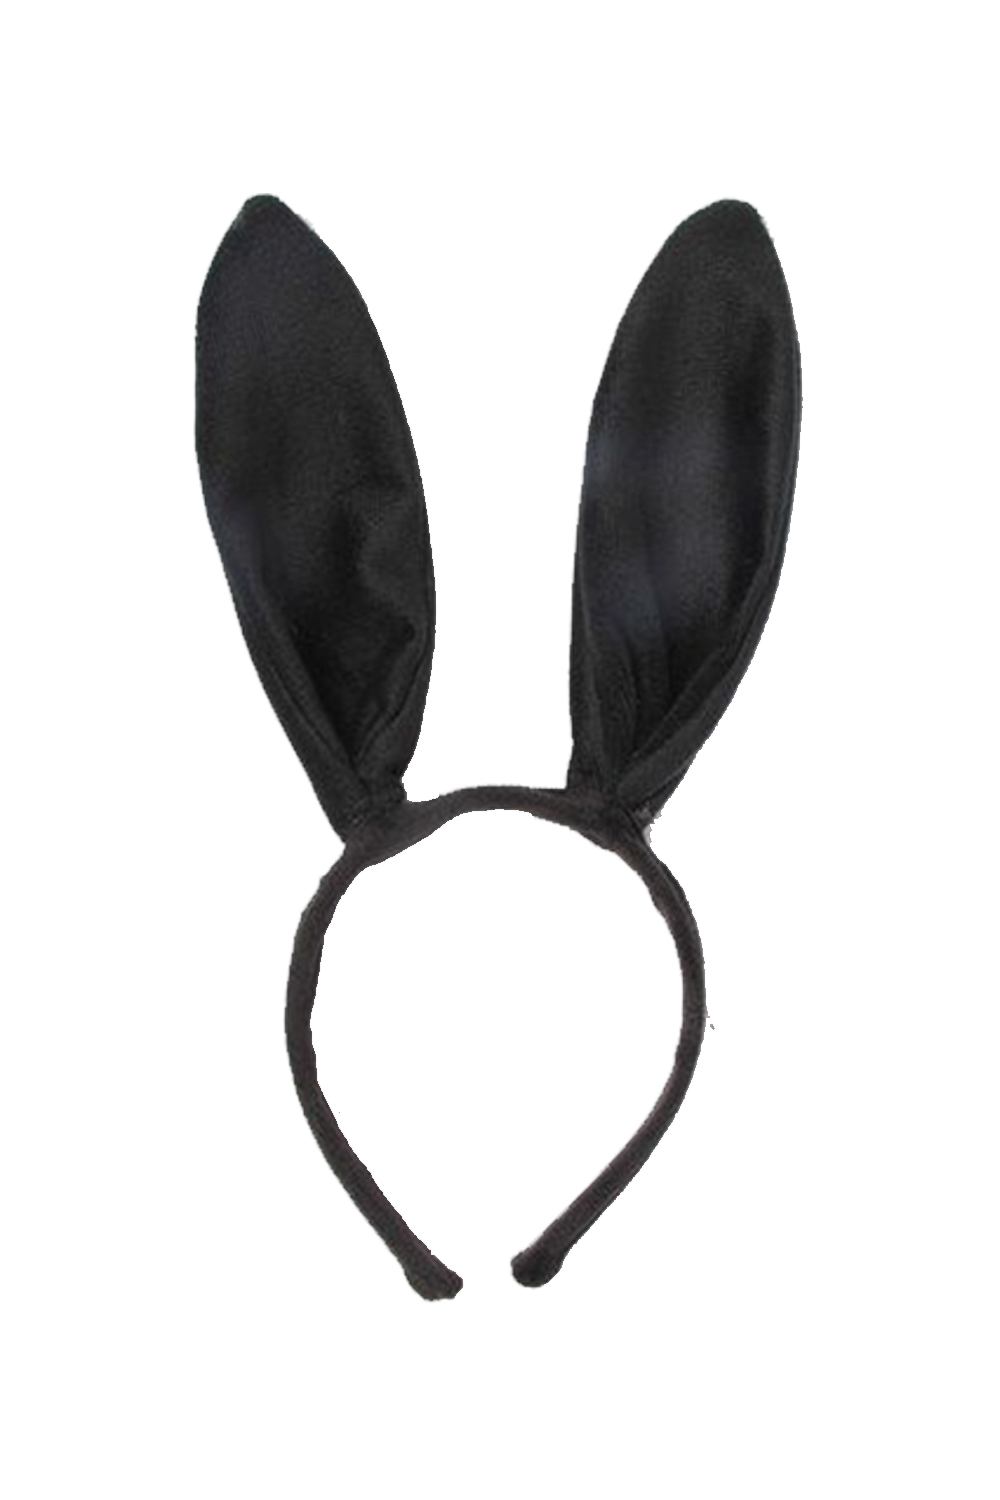 Black Fabric Bunny Rabbit Ears Aliceband (Pack of 6)